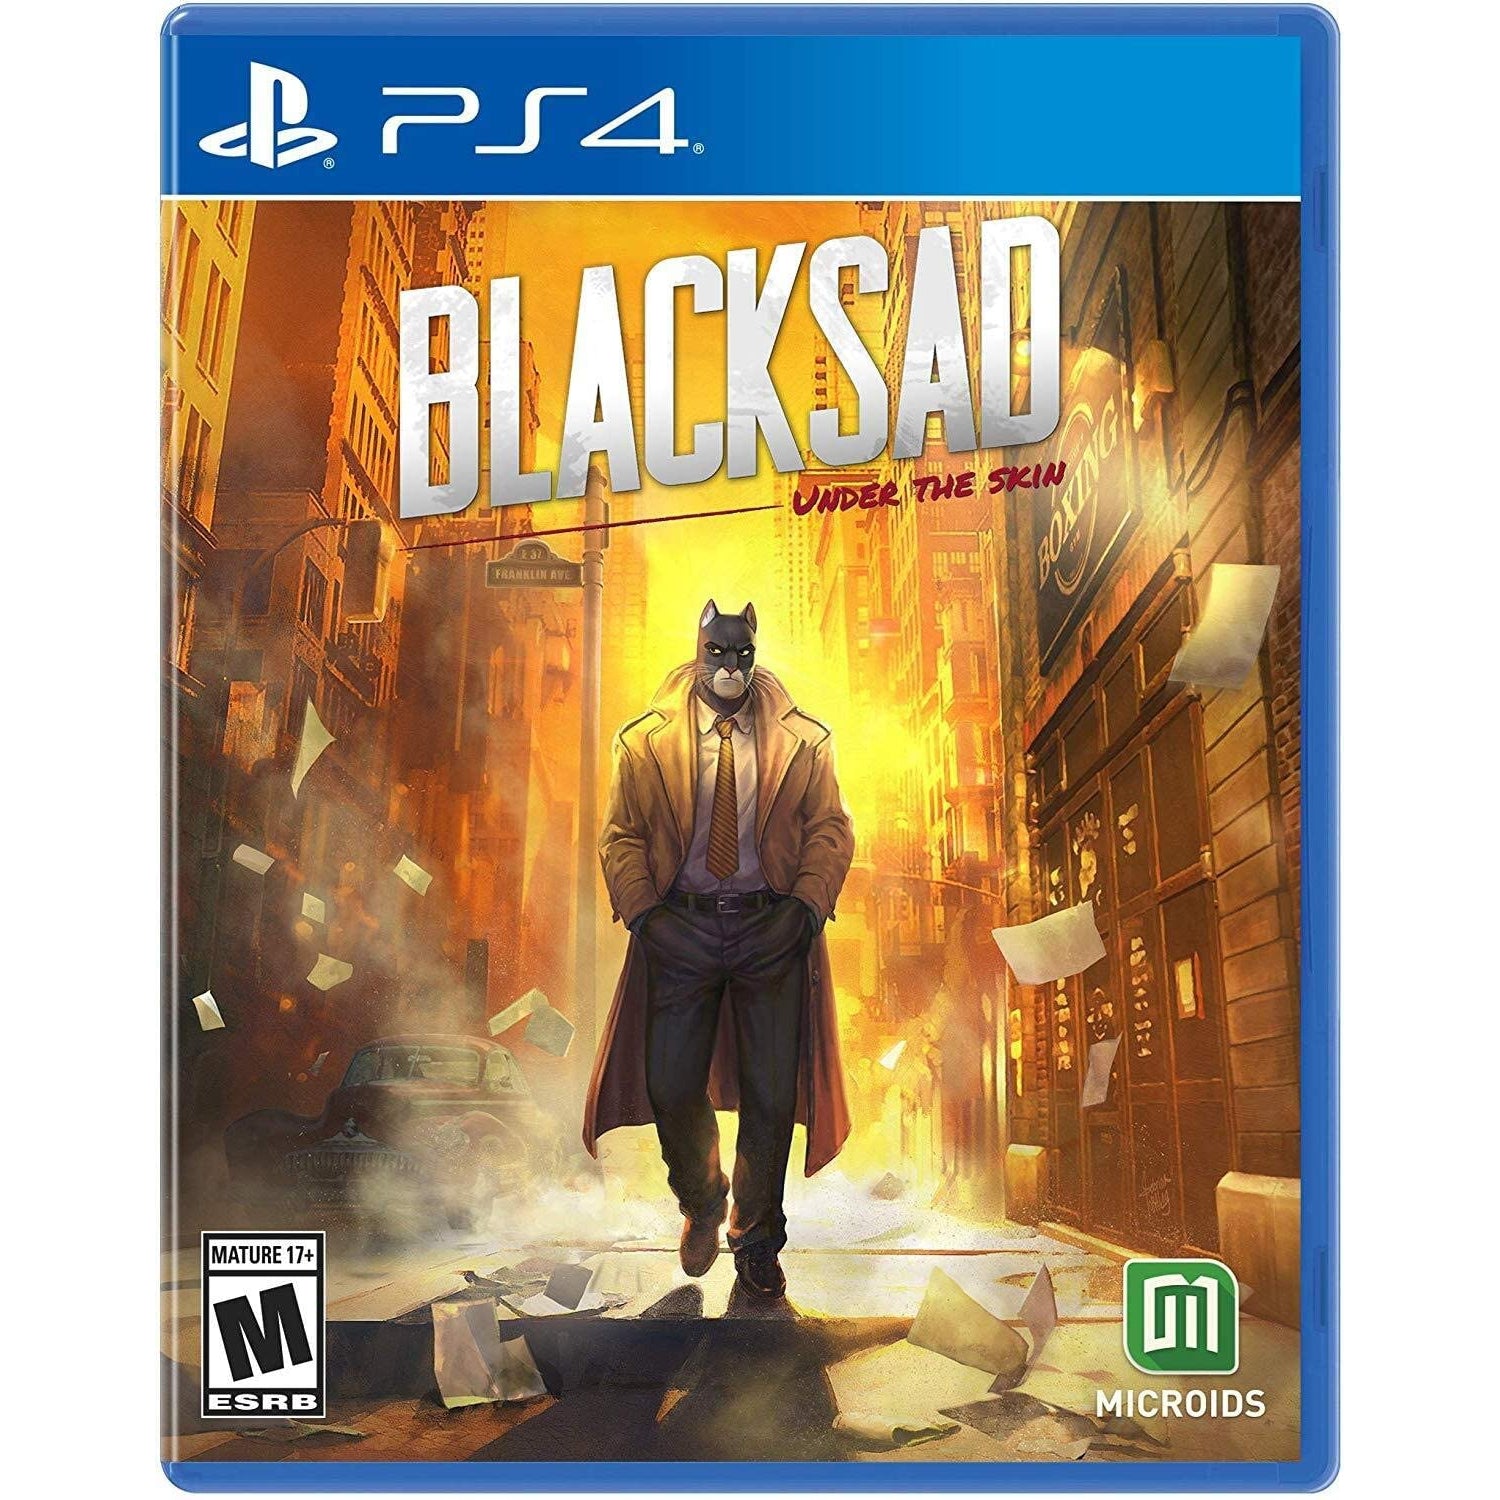 Blacksad: Under The Skin Limited Edition for (PS4)